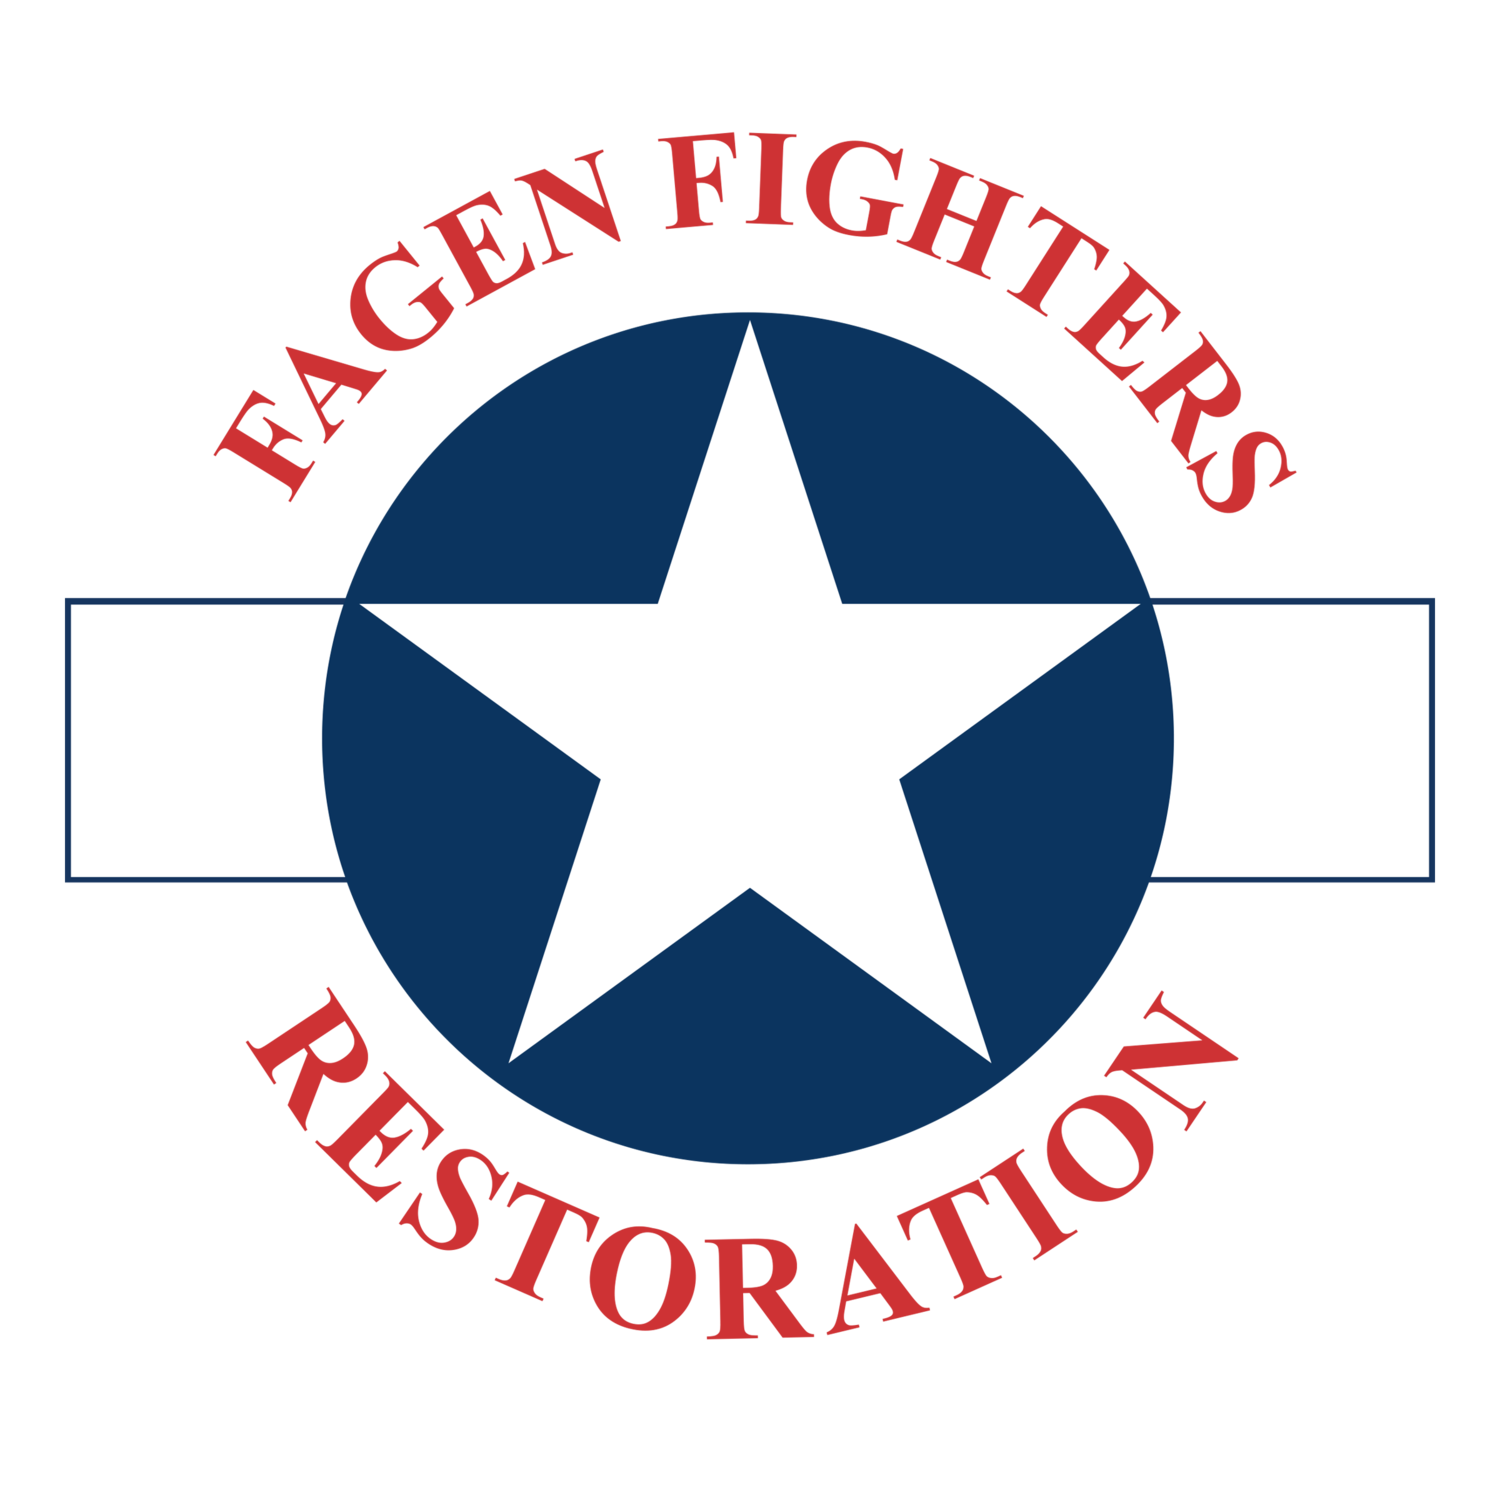 Fagen Fighters Restoration